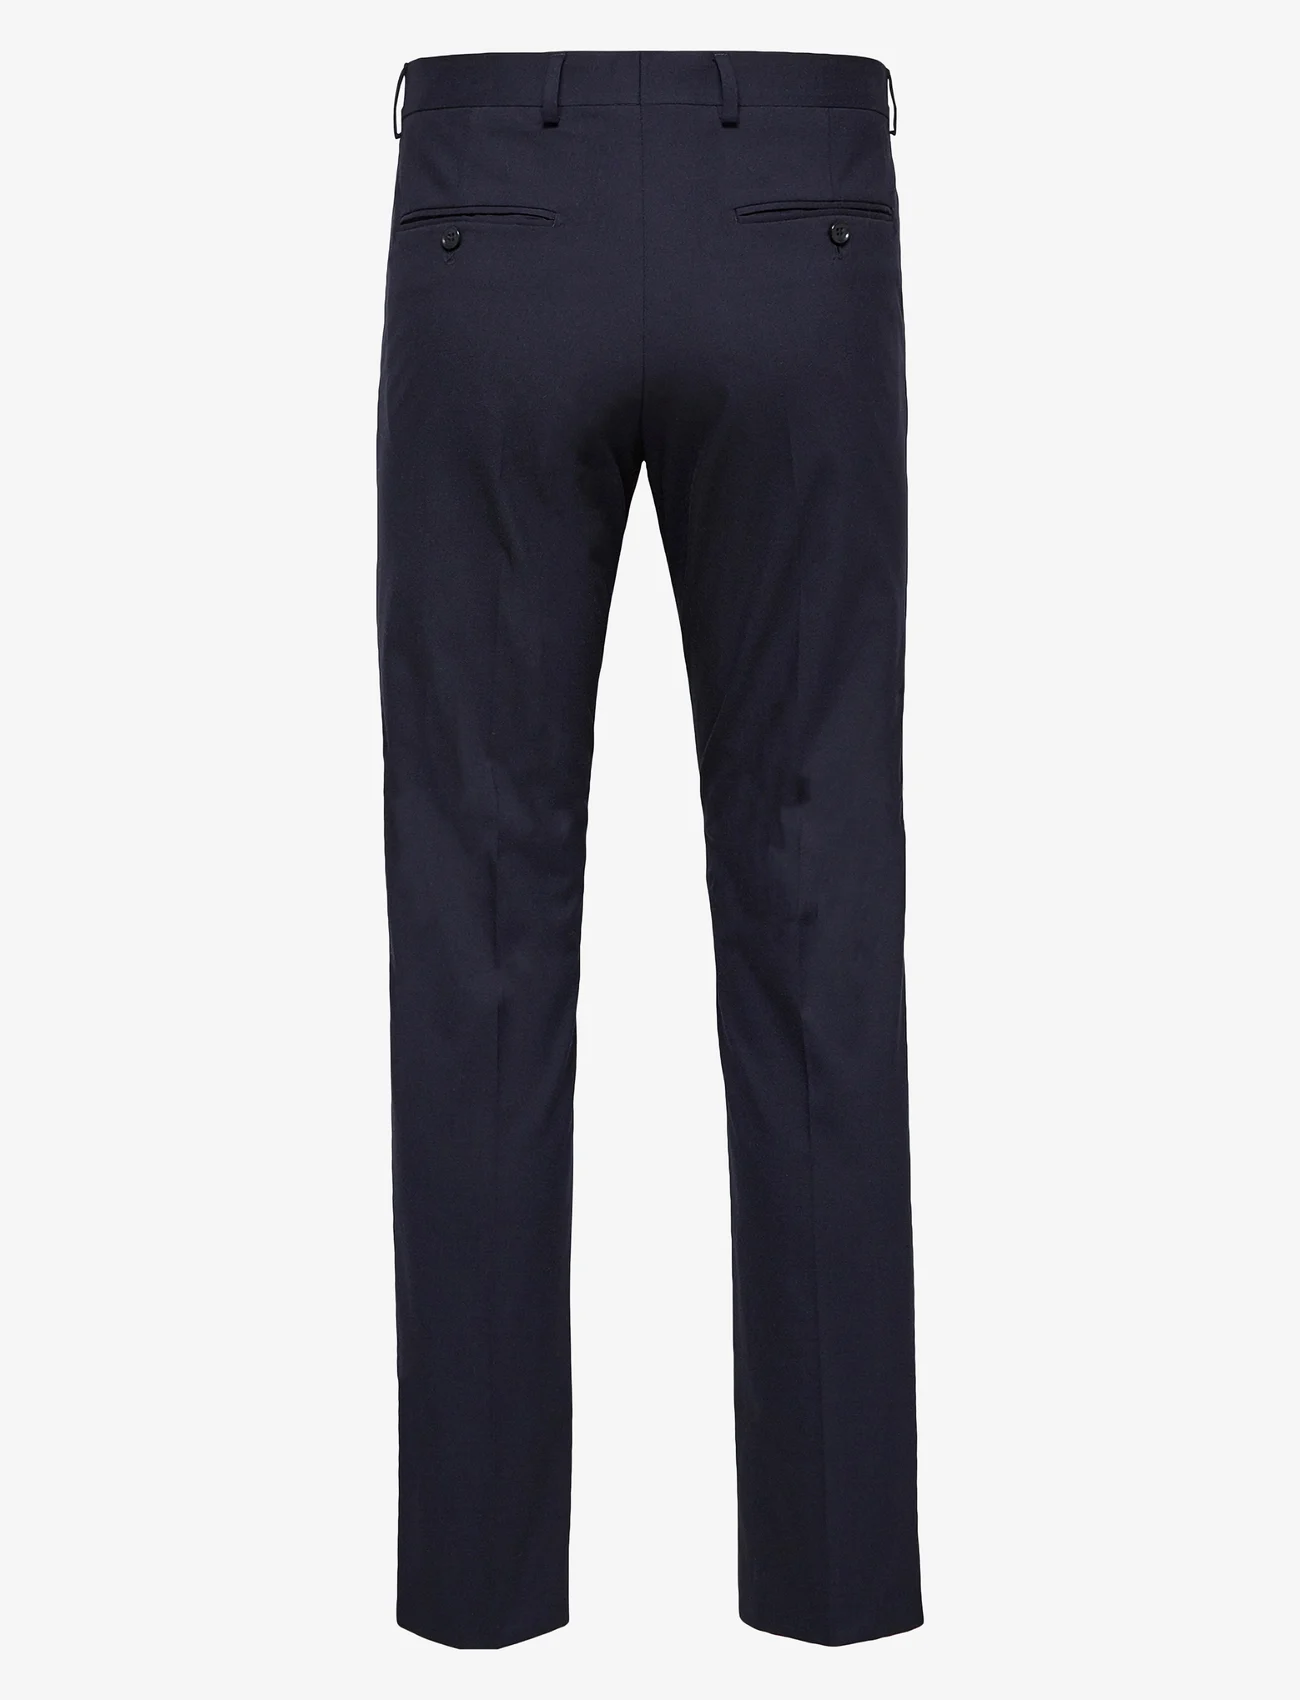 Selected Homme - SLHSLIM-MYLOLOGAN NAVY TROUSER B NOOS - formal trousers - navy blazer - 1